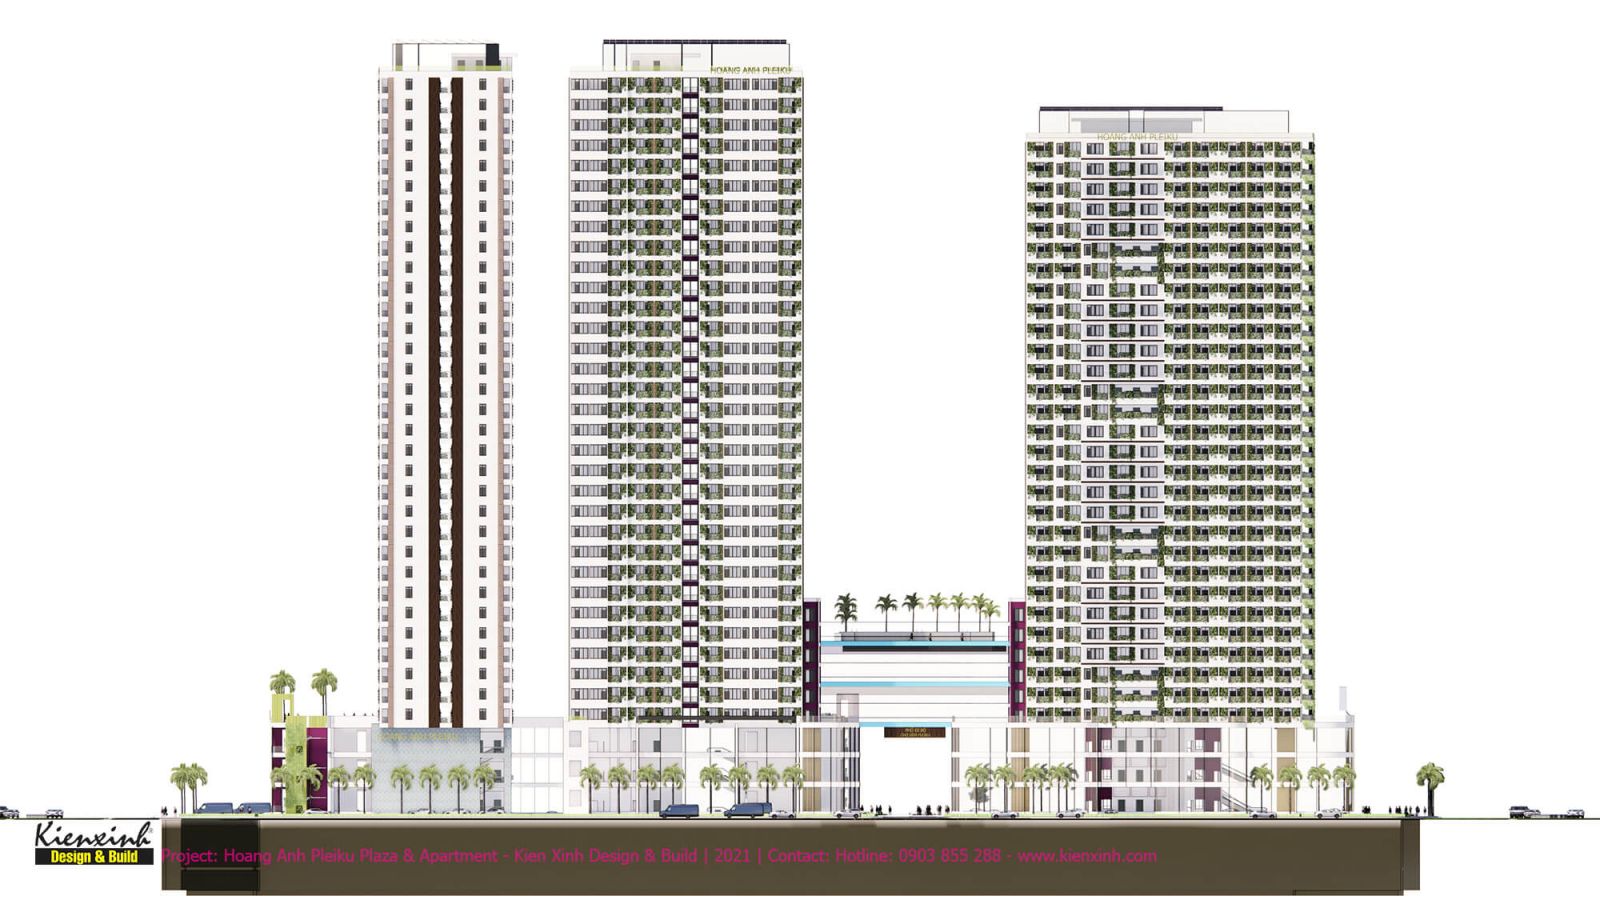 Hoang Anh Pleiku Plaza & Apartment